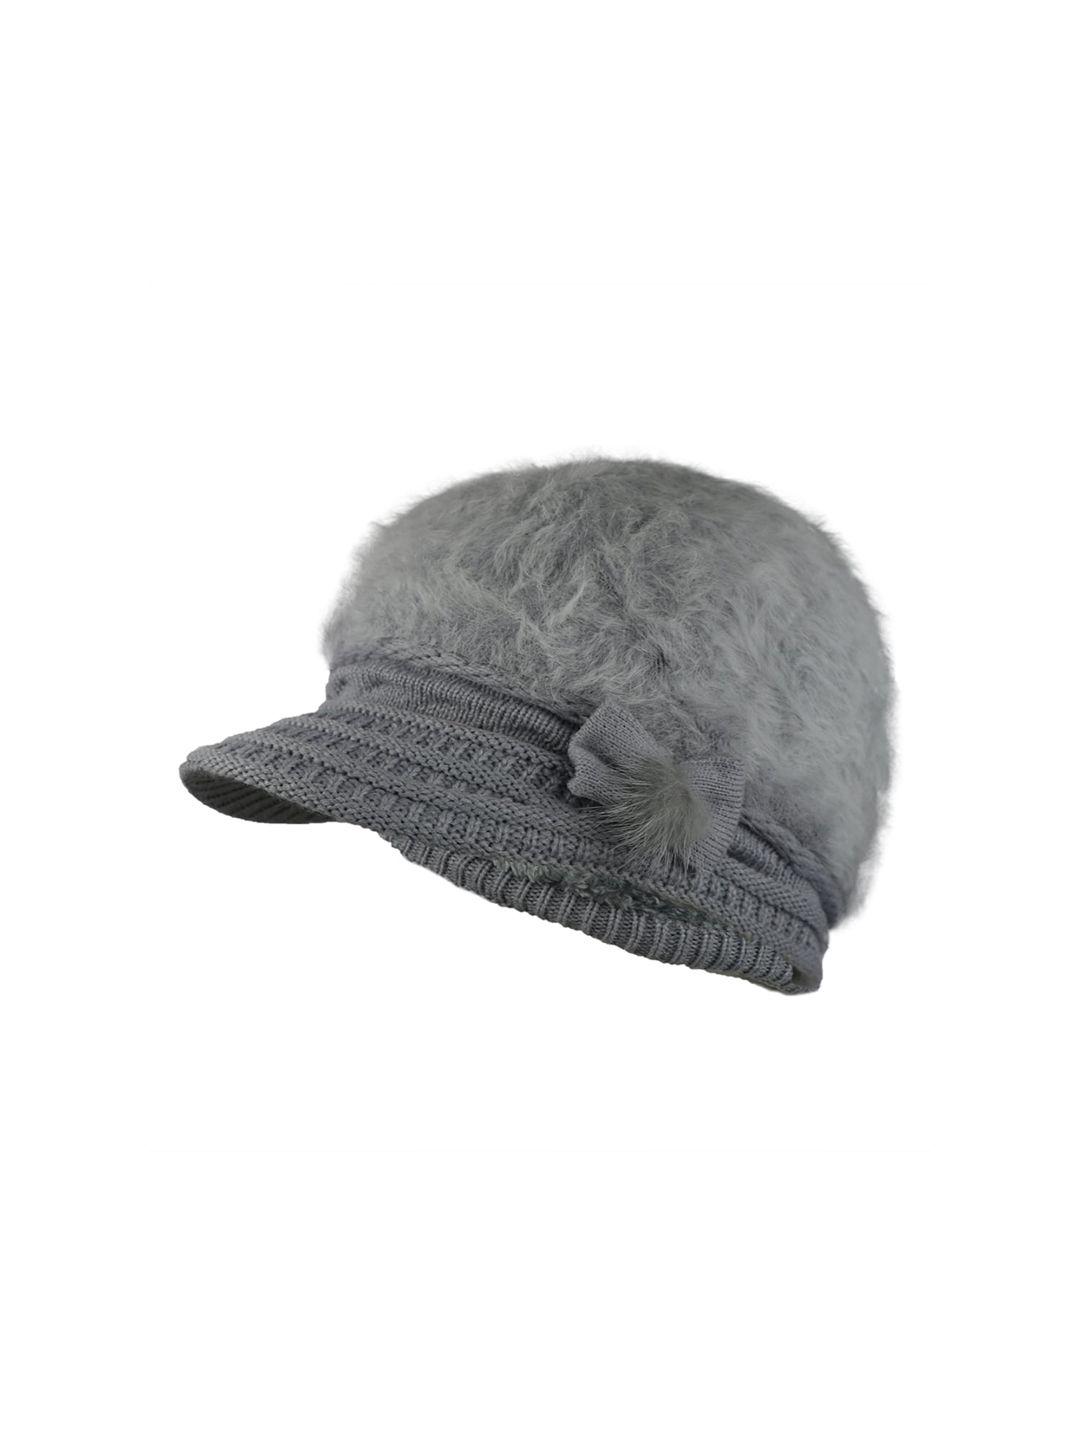 isweven unisex grey self design visor cap